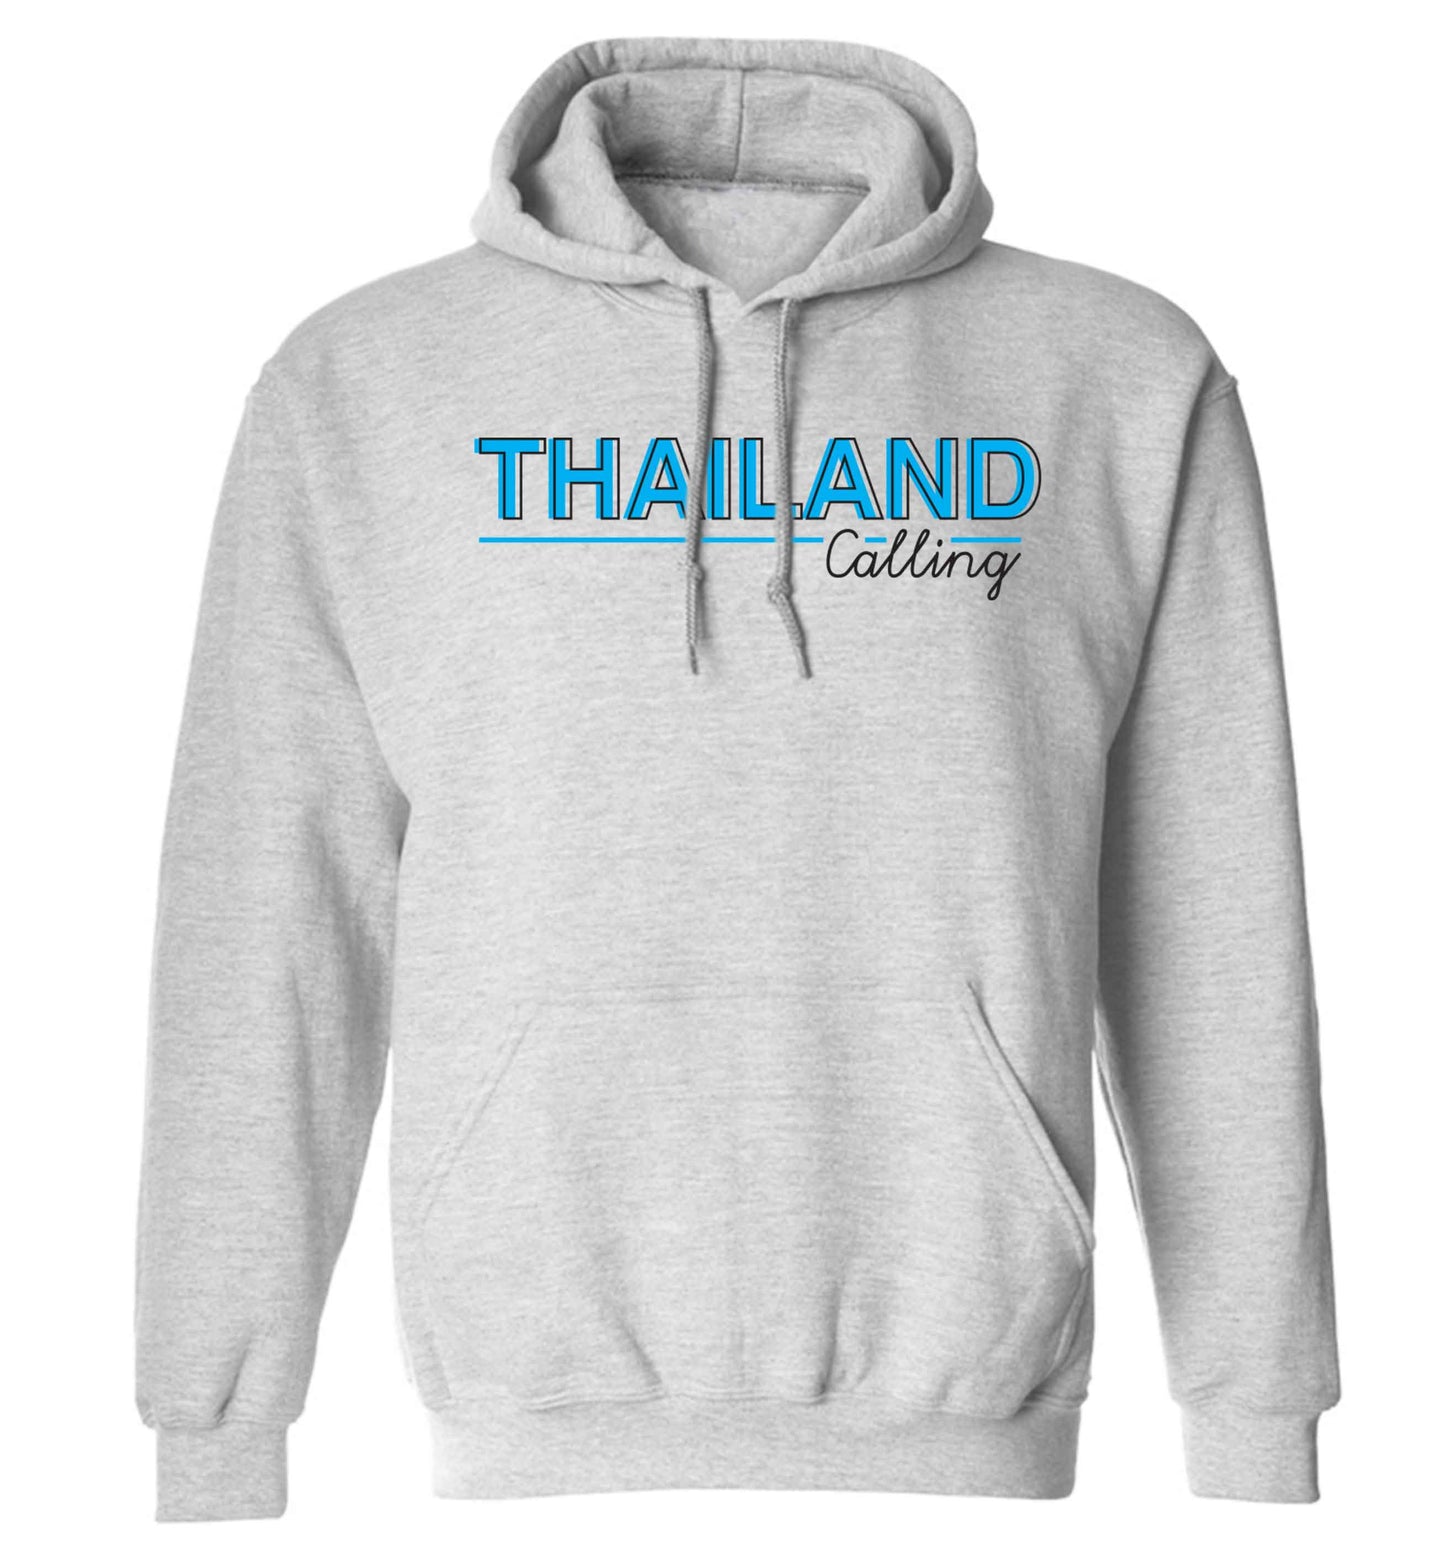 Thailand calling adults unisex grey hoodie 2XL